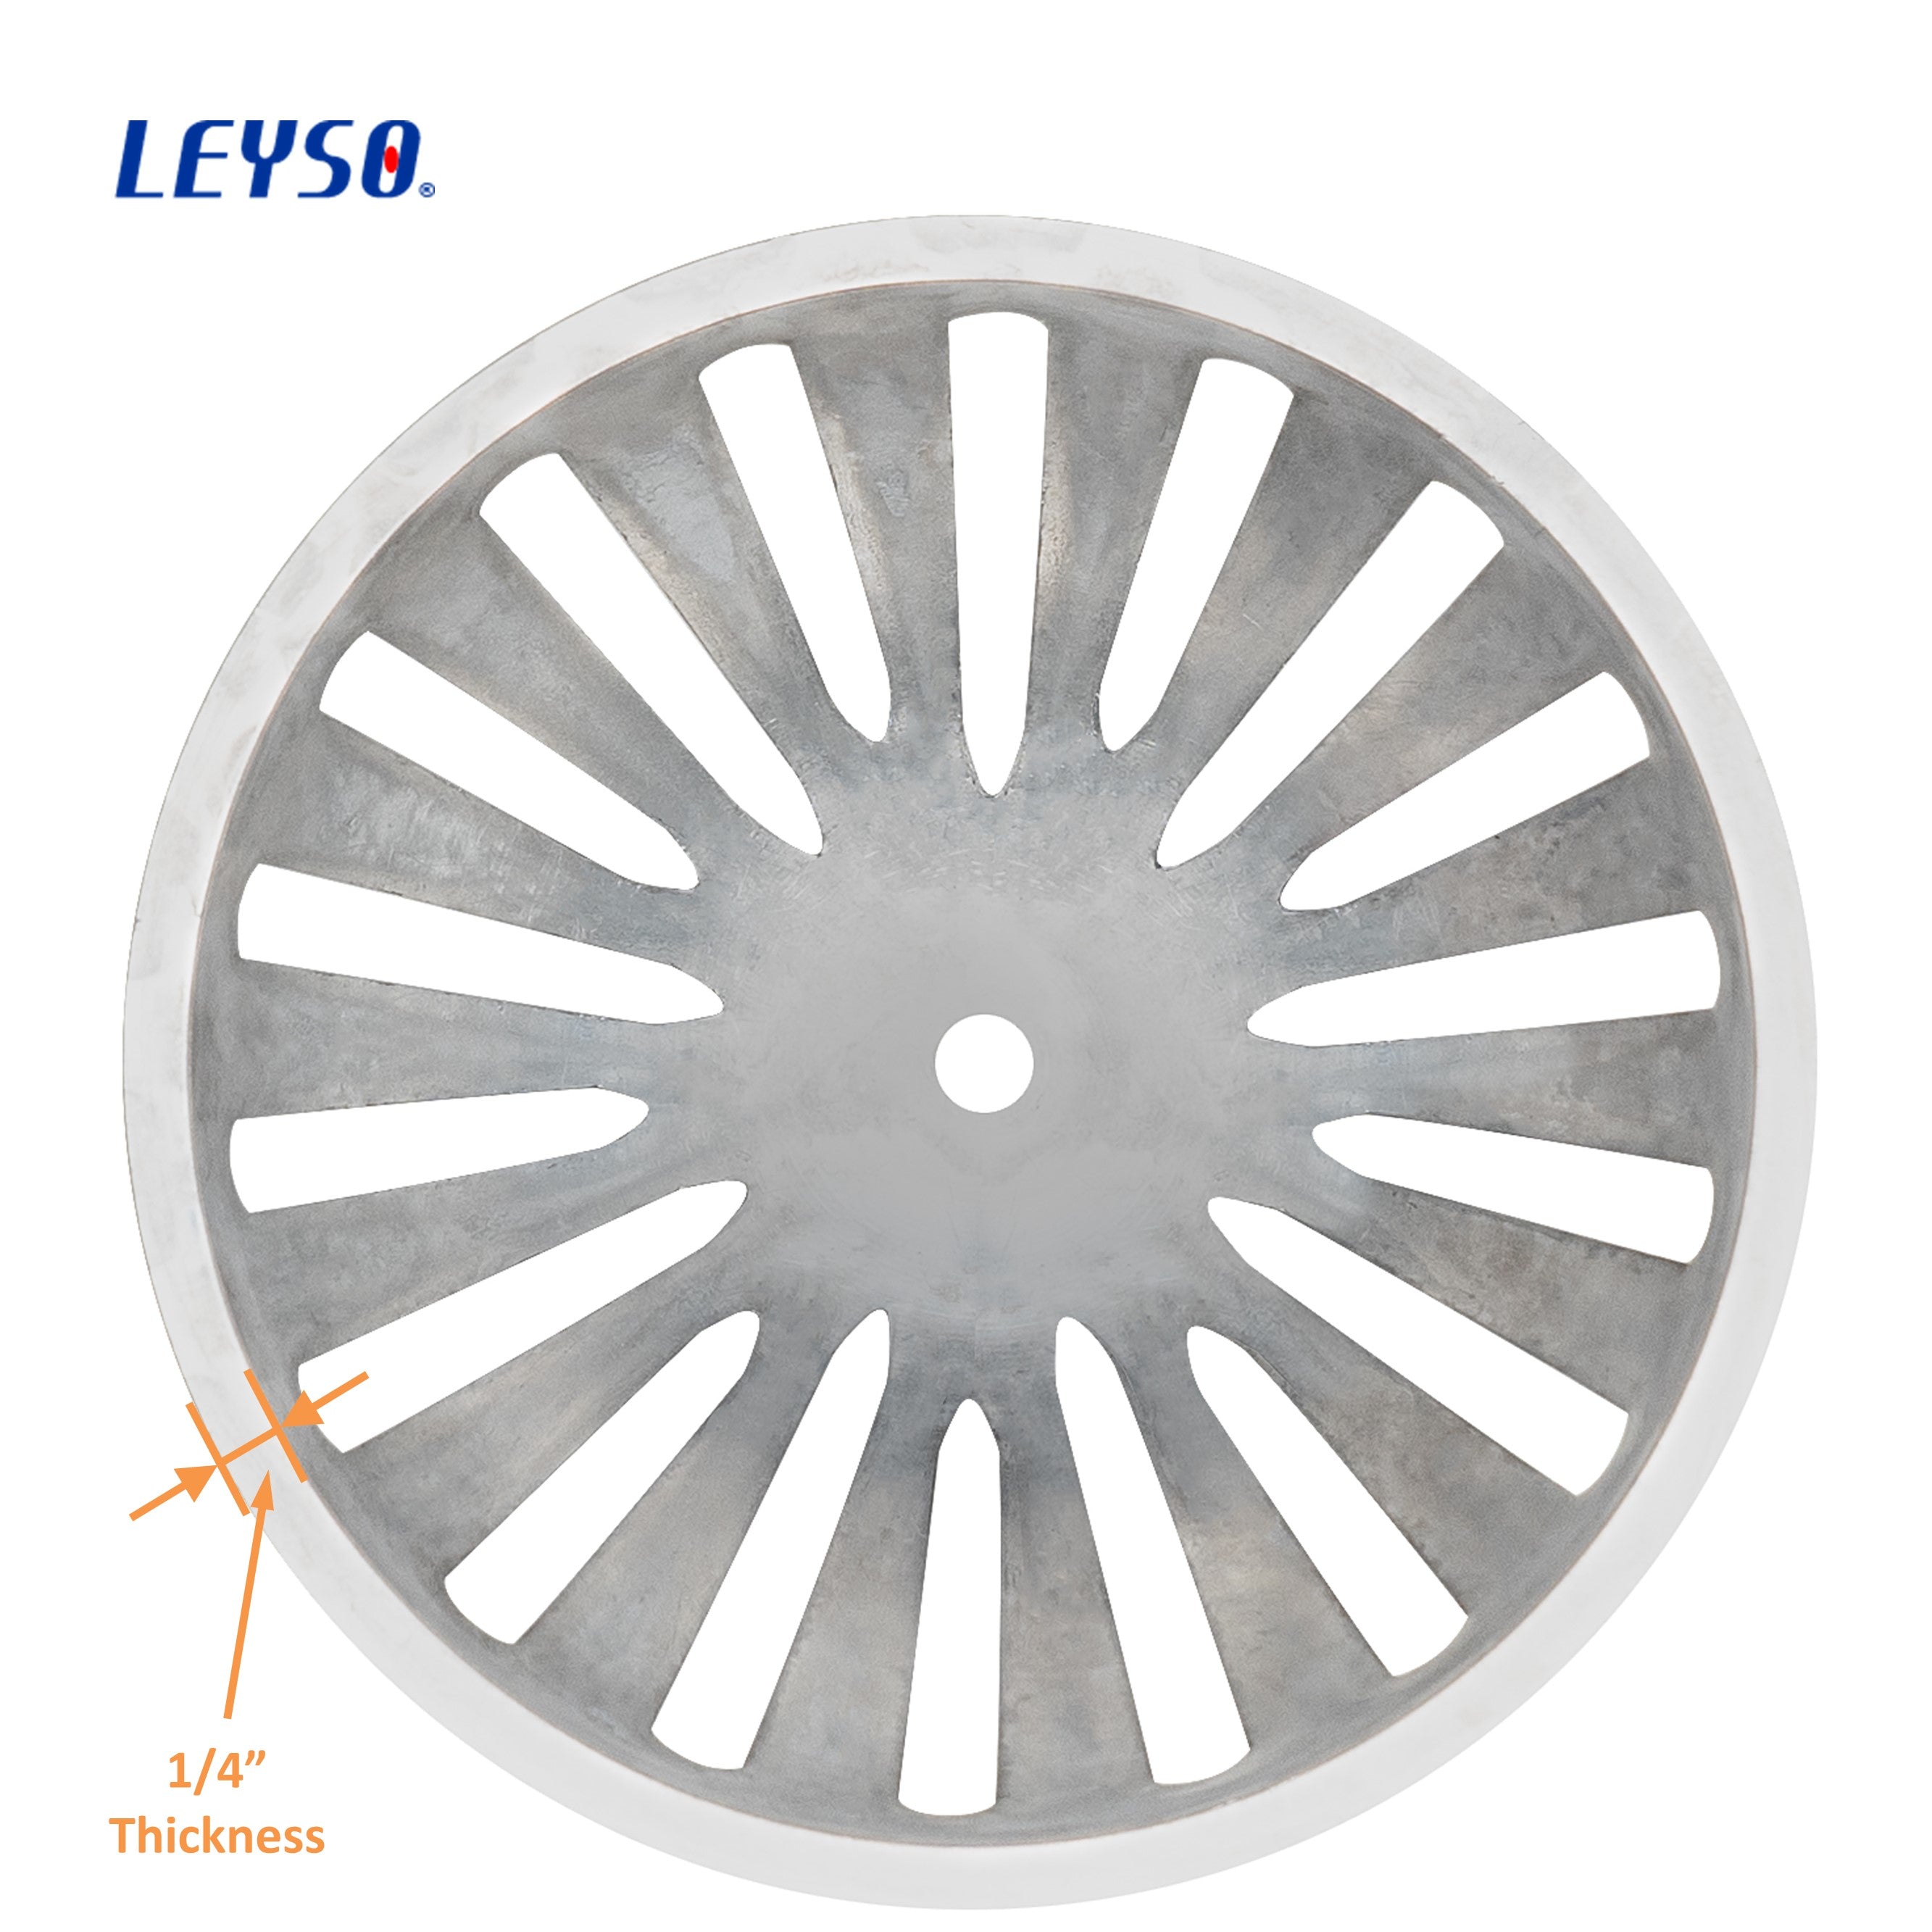 Leyso Aluminum Dome Strainer for 12" Floor Sink, 5-1/4" Diameter - Perfect for Restaurant, Bar, Buffet